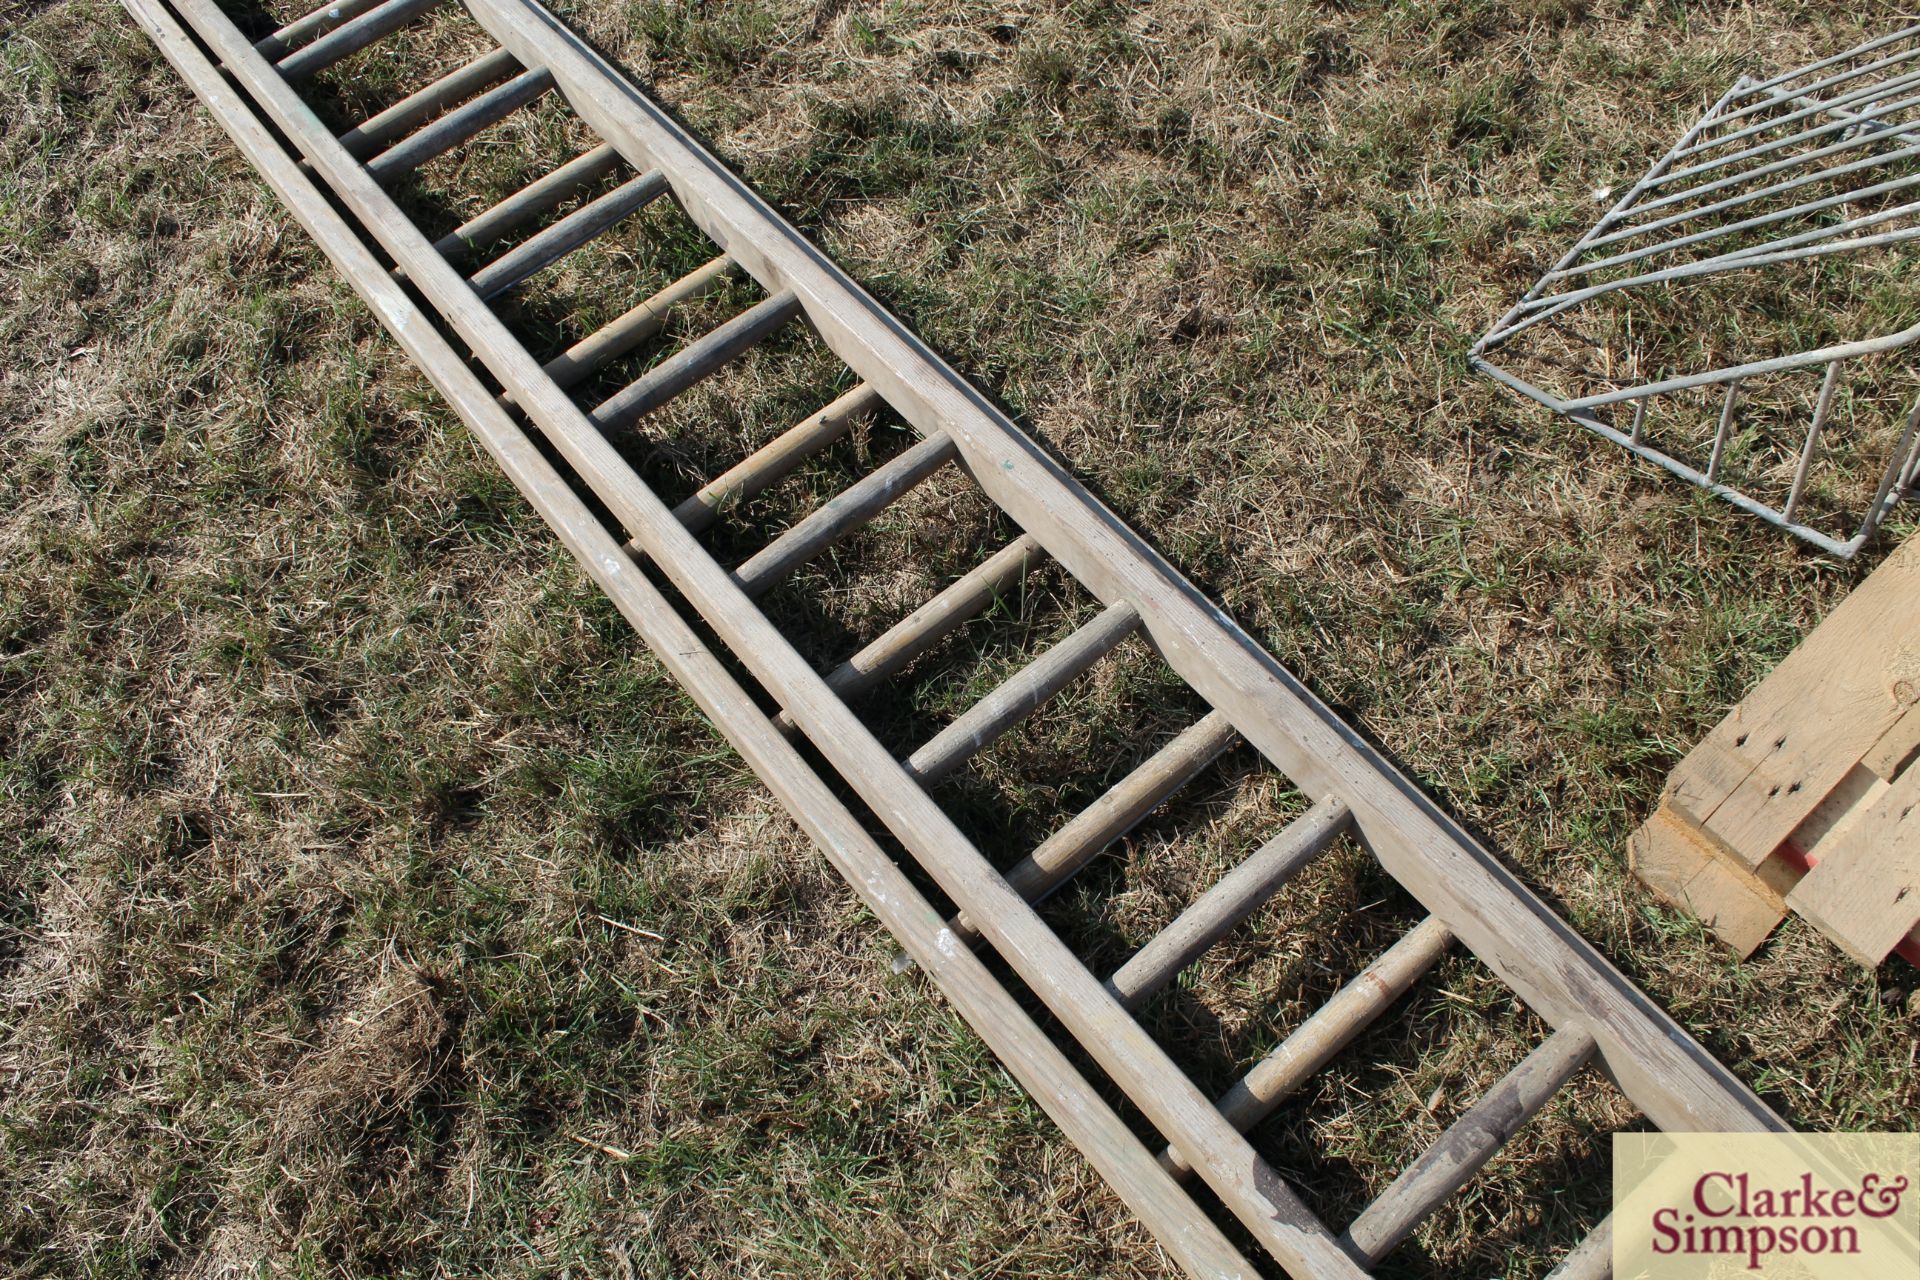 Wooden extending ladder. - Image 3 of 4